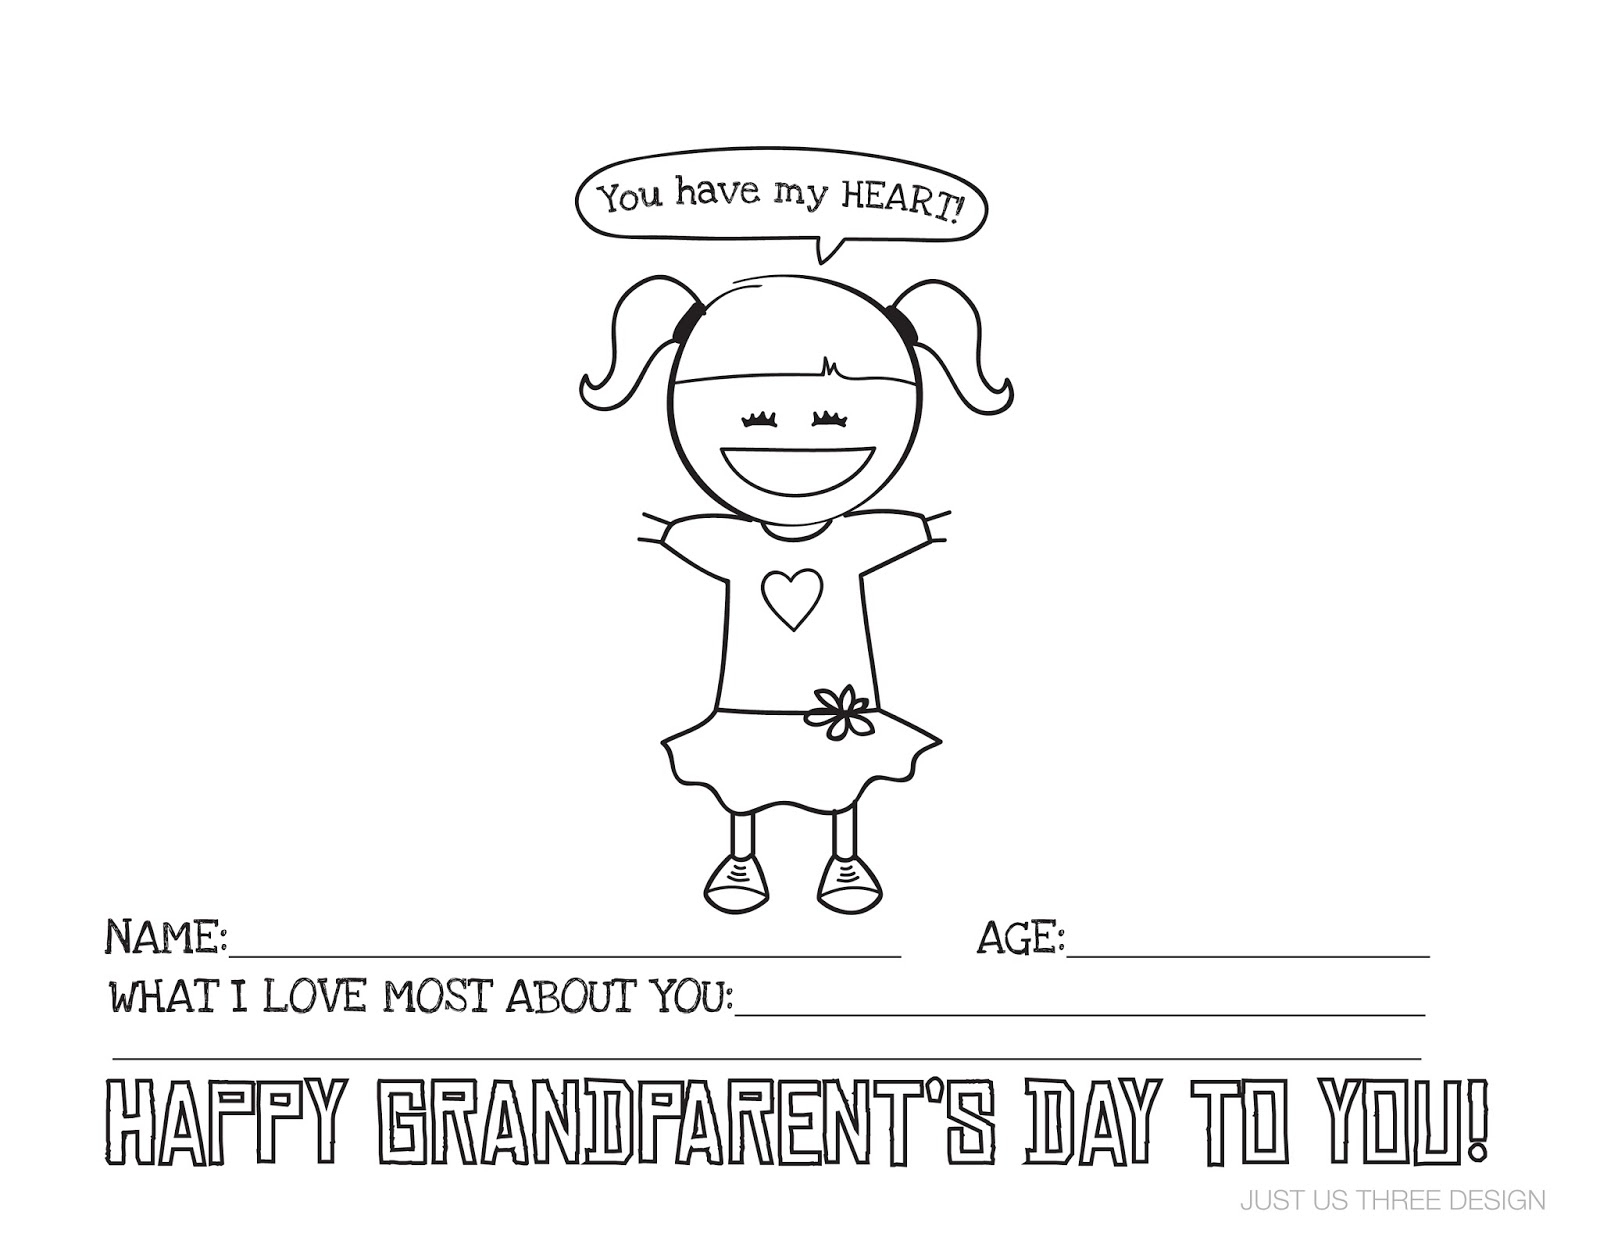 grandparents-day-cards-printable-free-free-printable